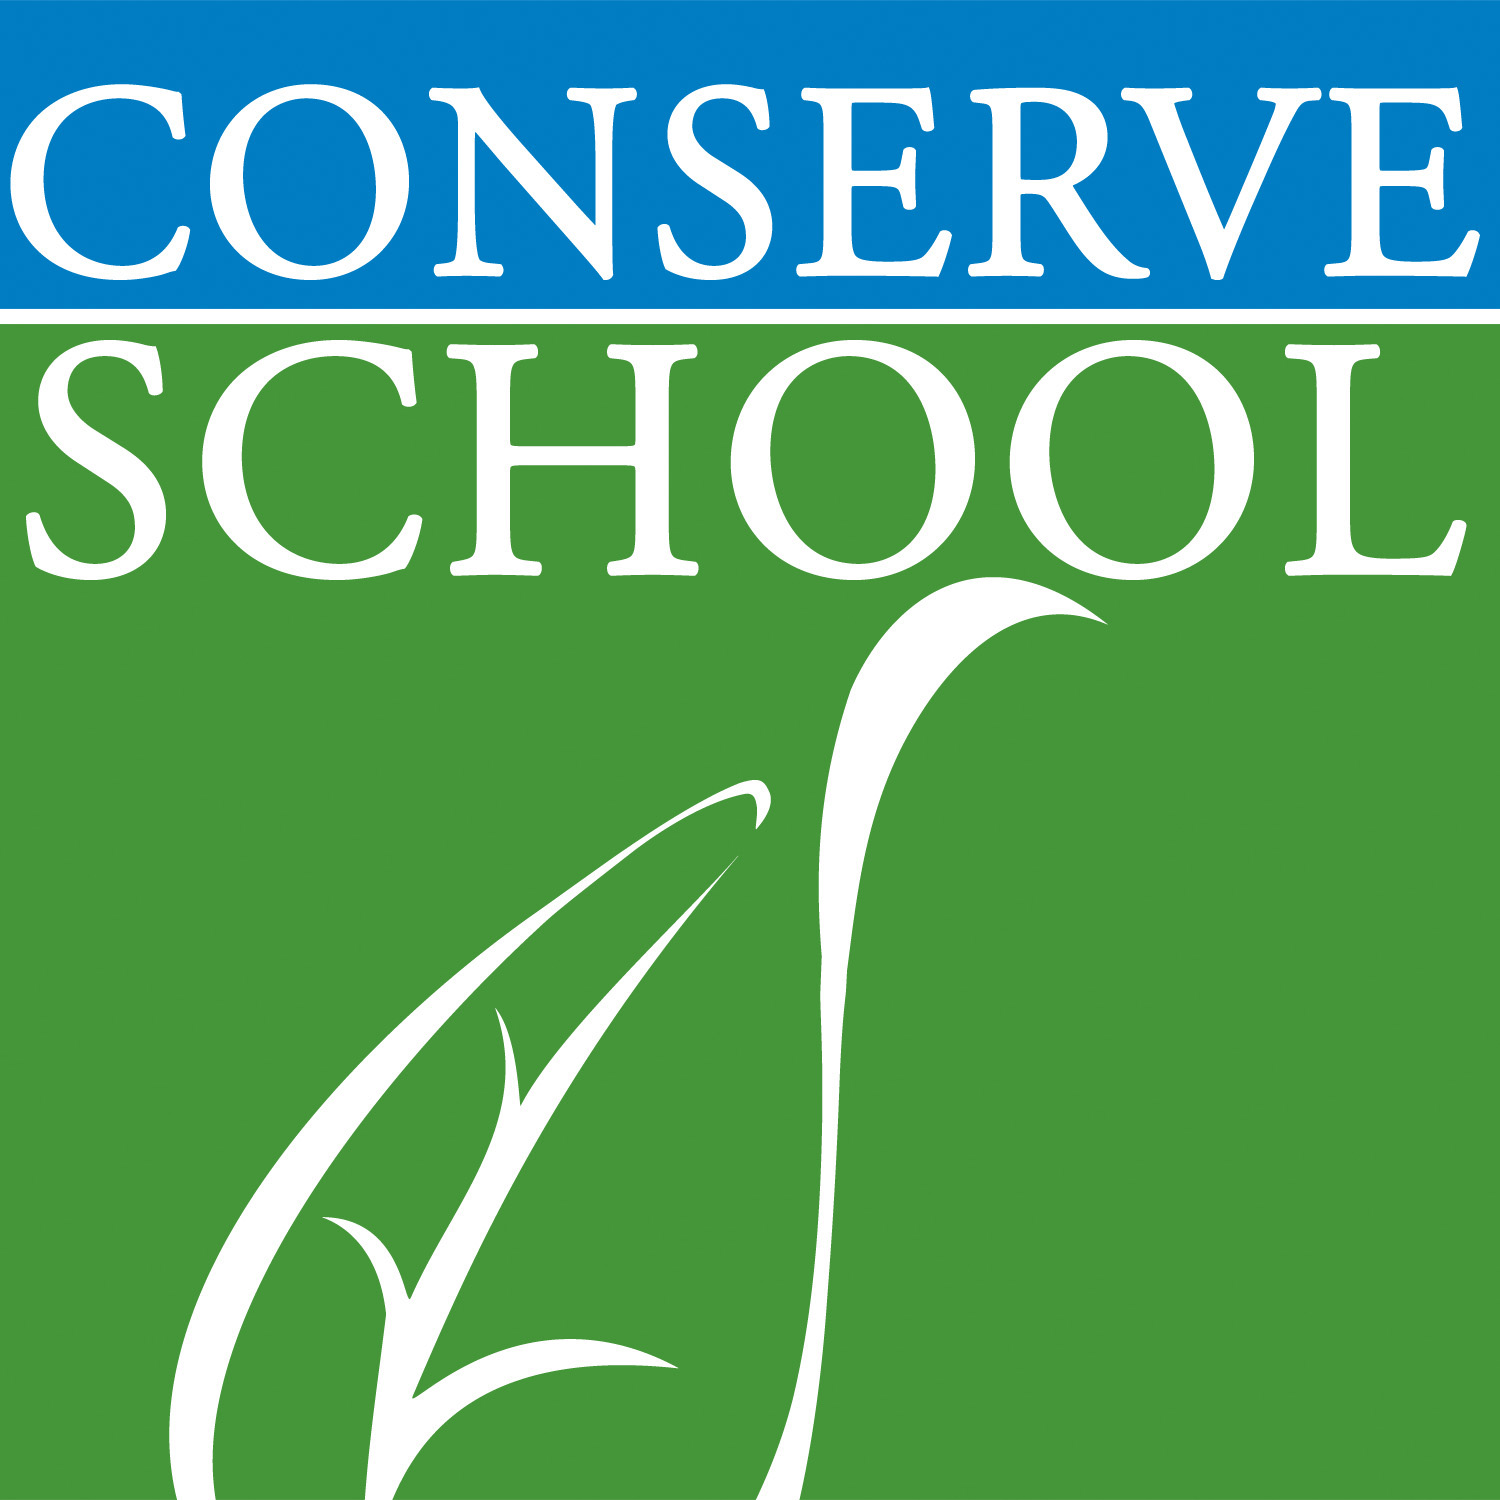 Conserve School